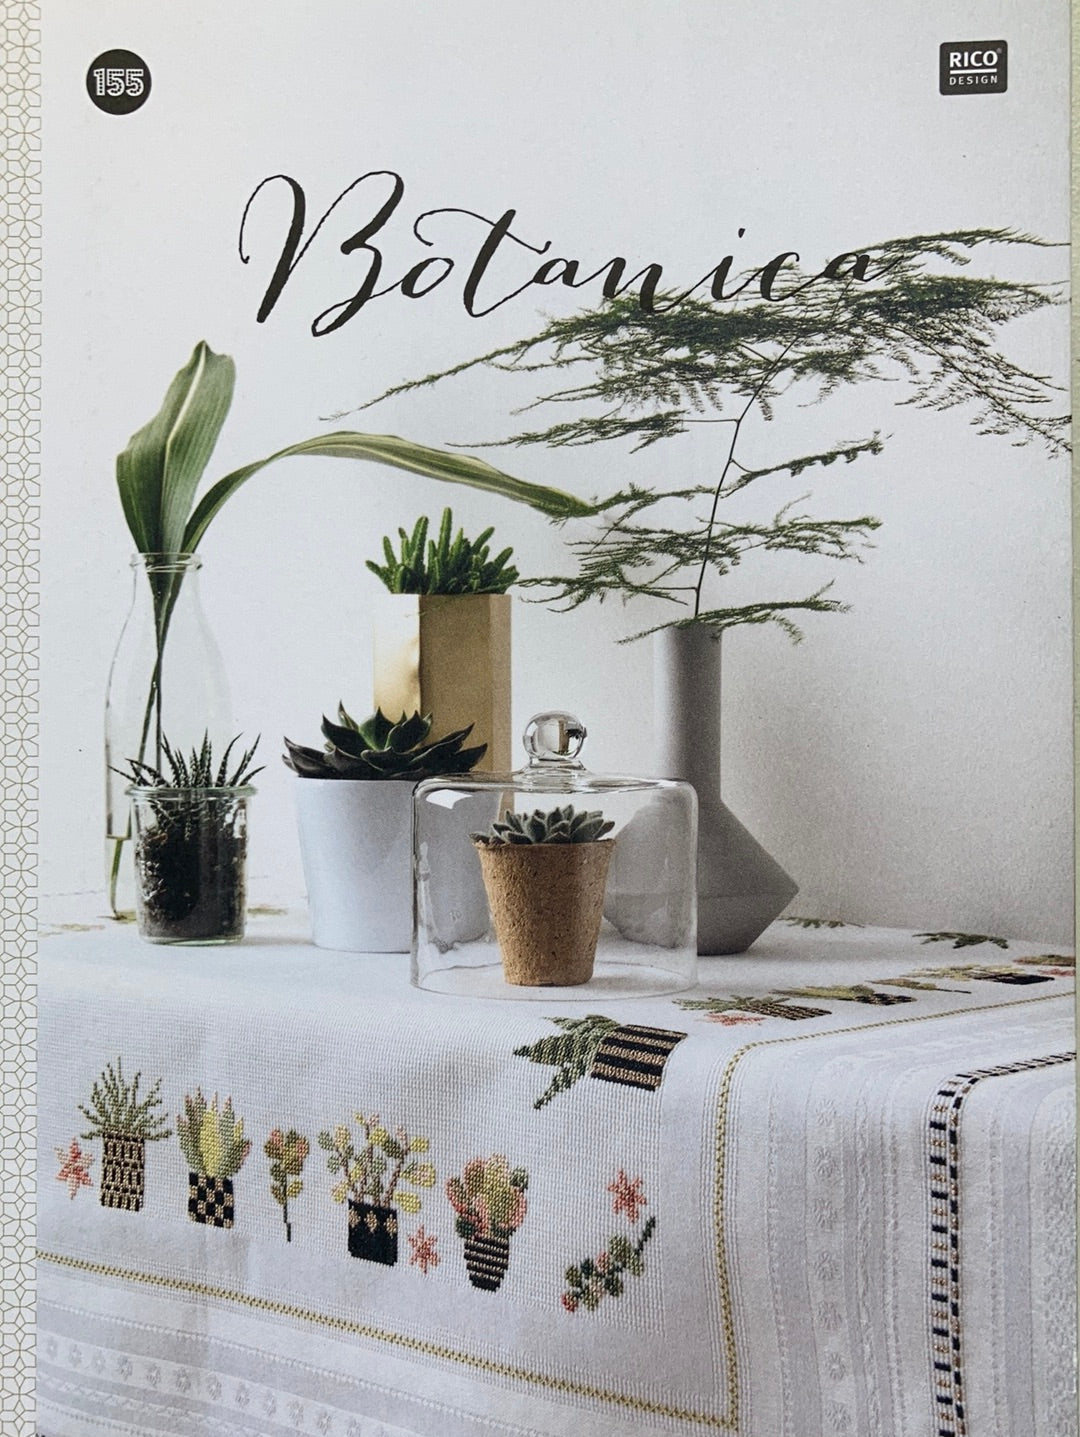 Book 155 Botanica